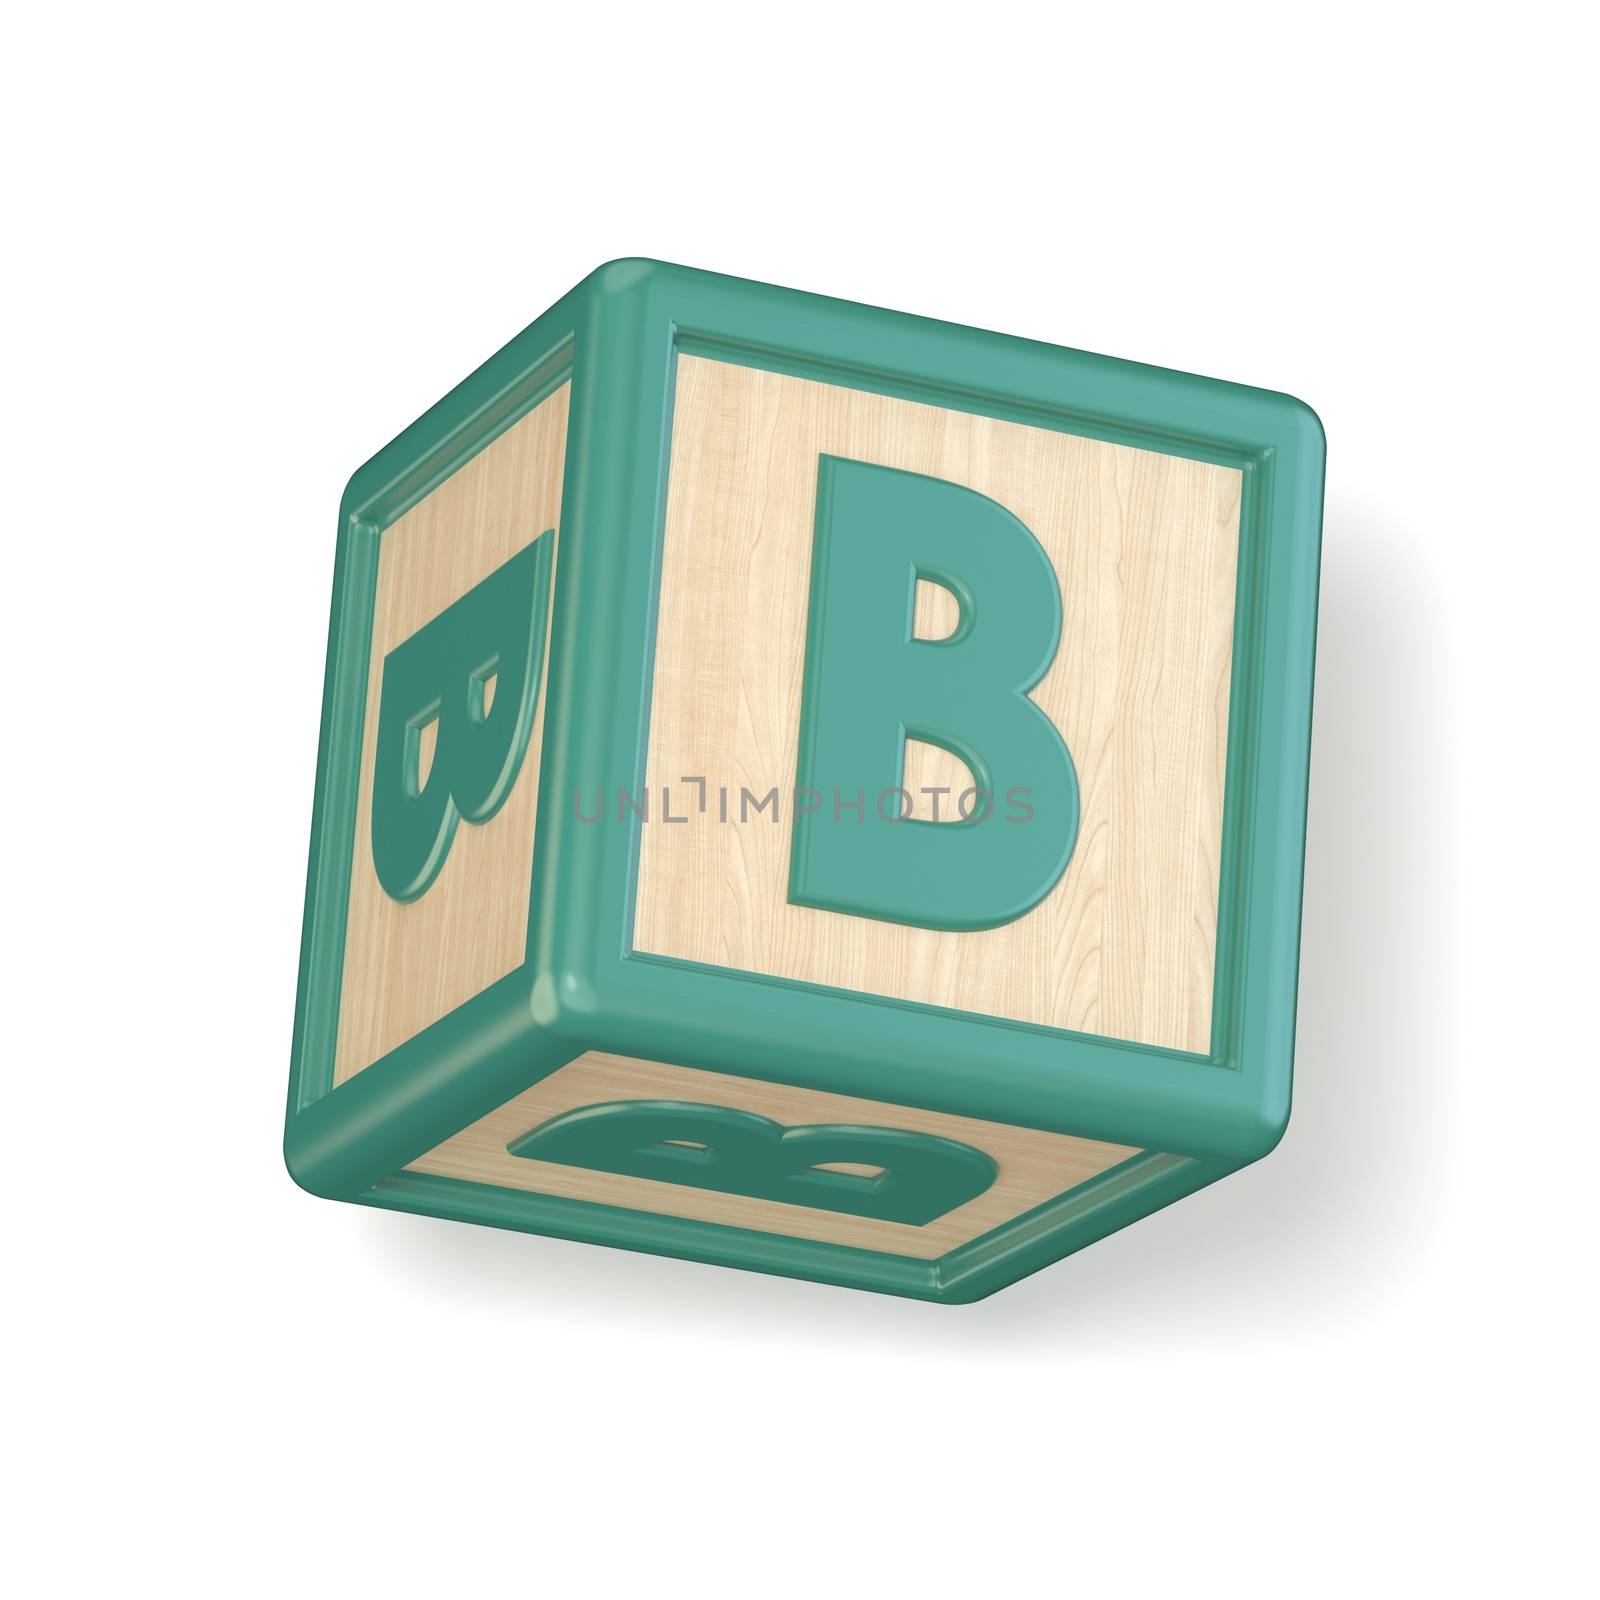 Letter B wooden alphabet blocks font rotated. 3D render illustration isolated on white background